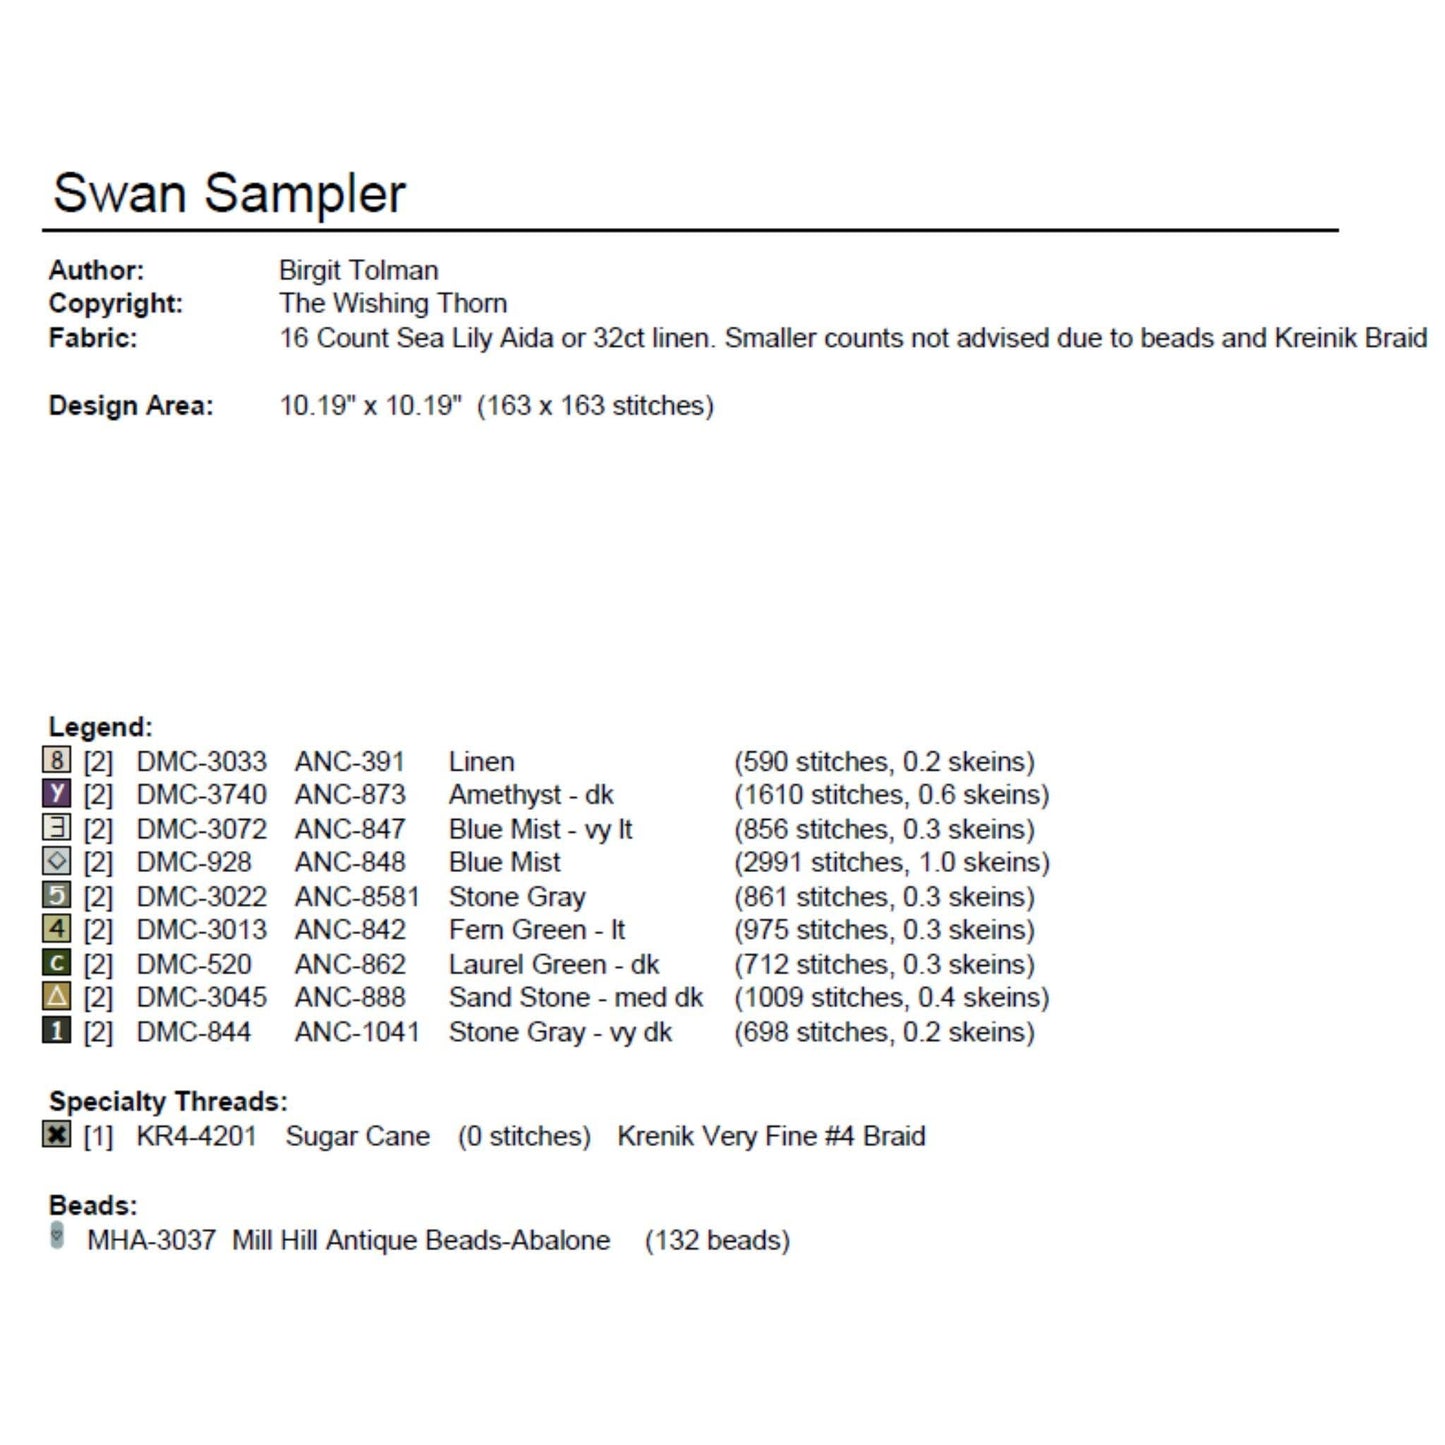 Swan Sampler Paper Chart | The Wishing Thorn